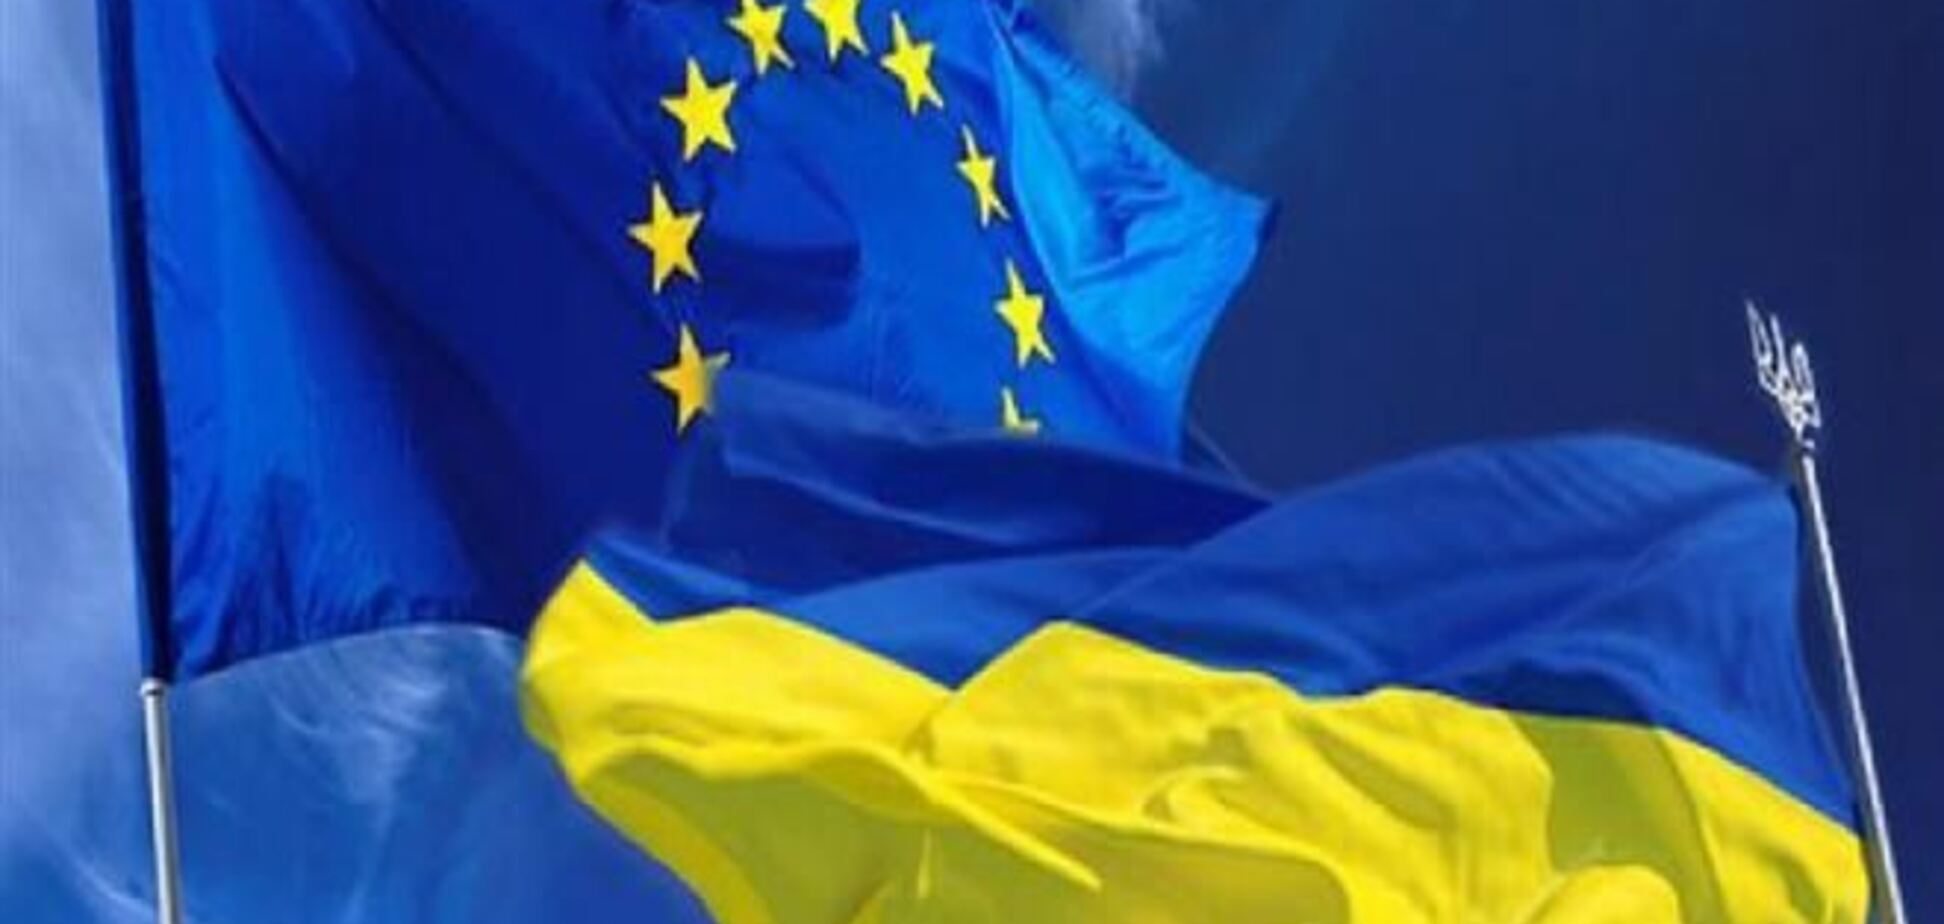 Европарламент приветствует смену власти в Украине демократическим путем